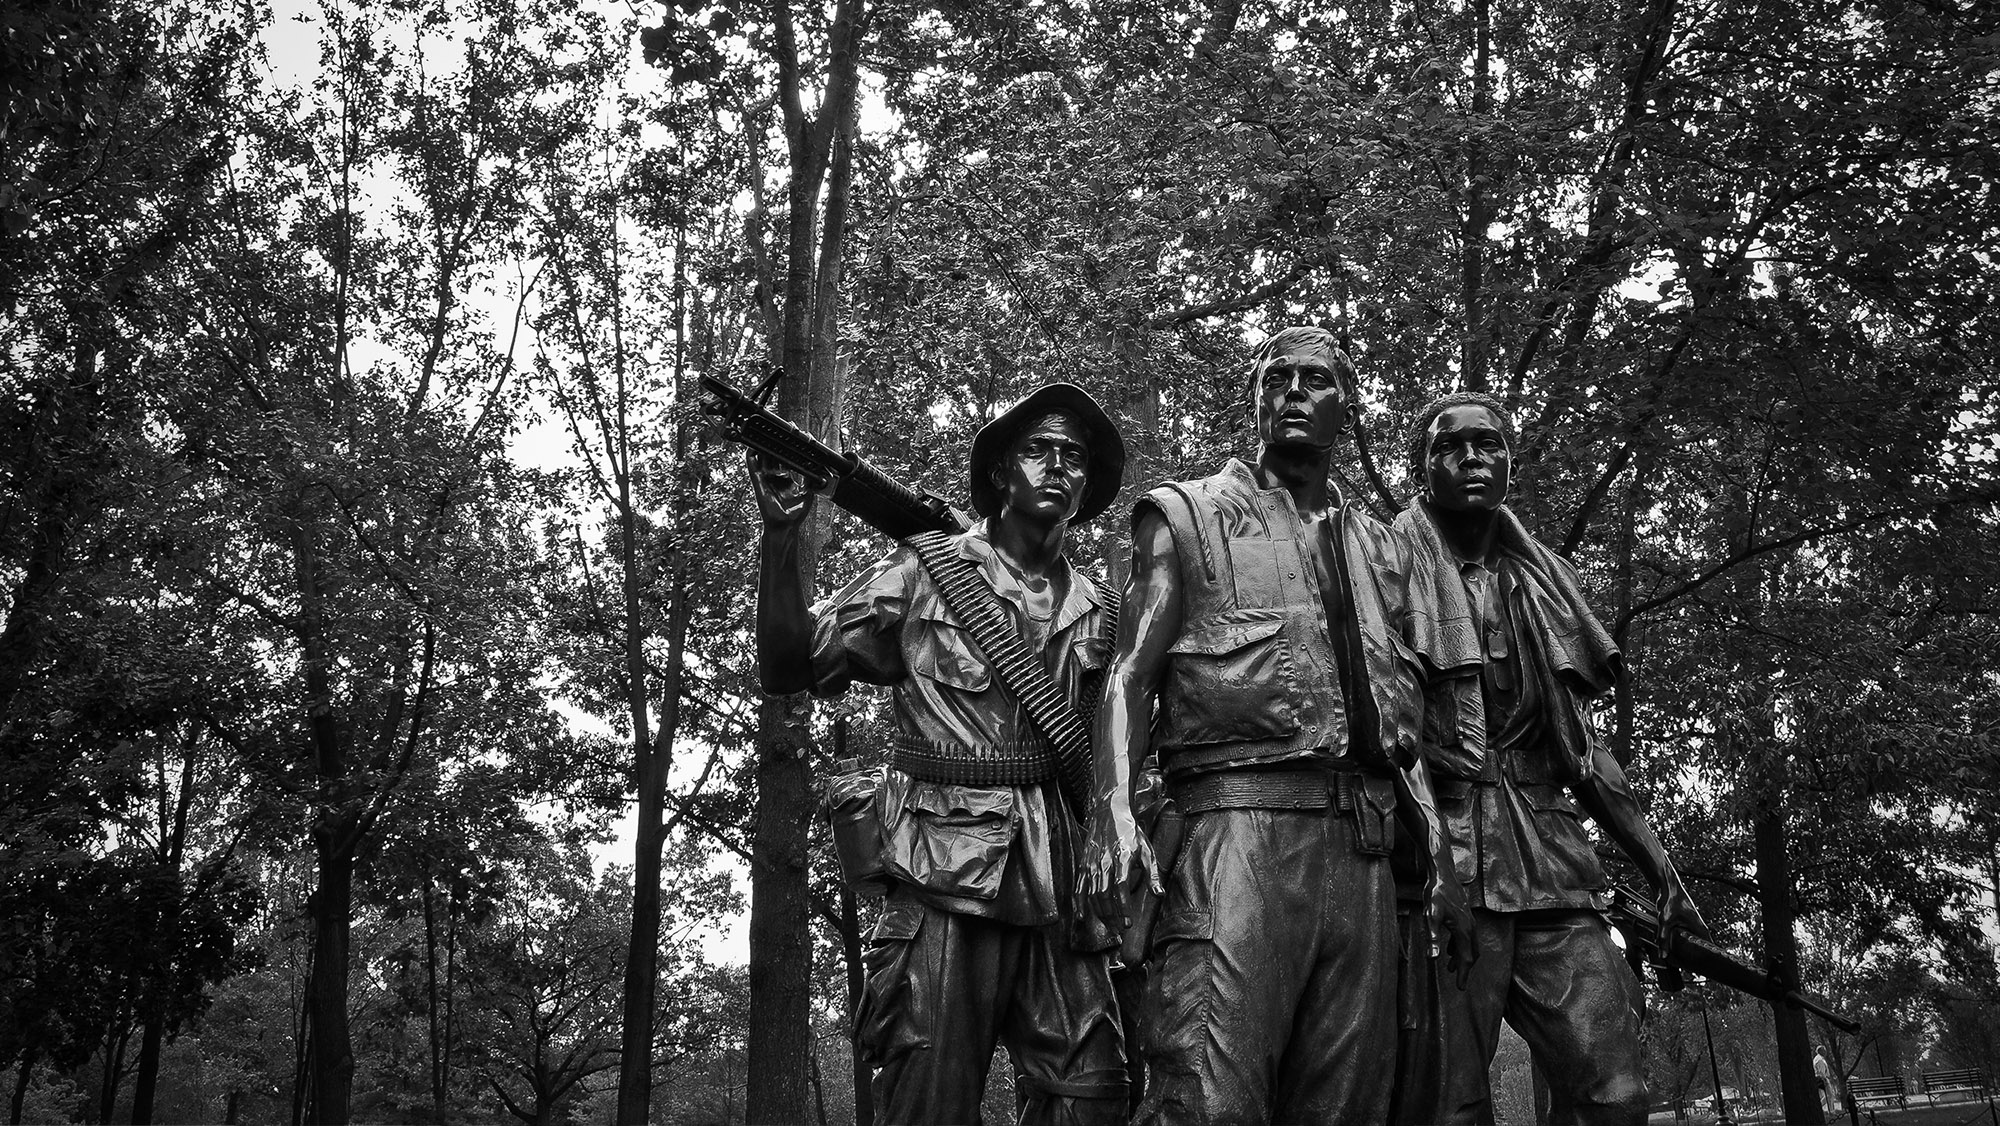 Three Soldiers Statue, Washington, D.C.